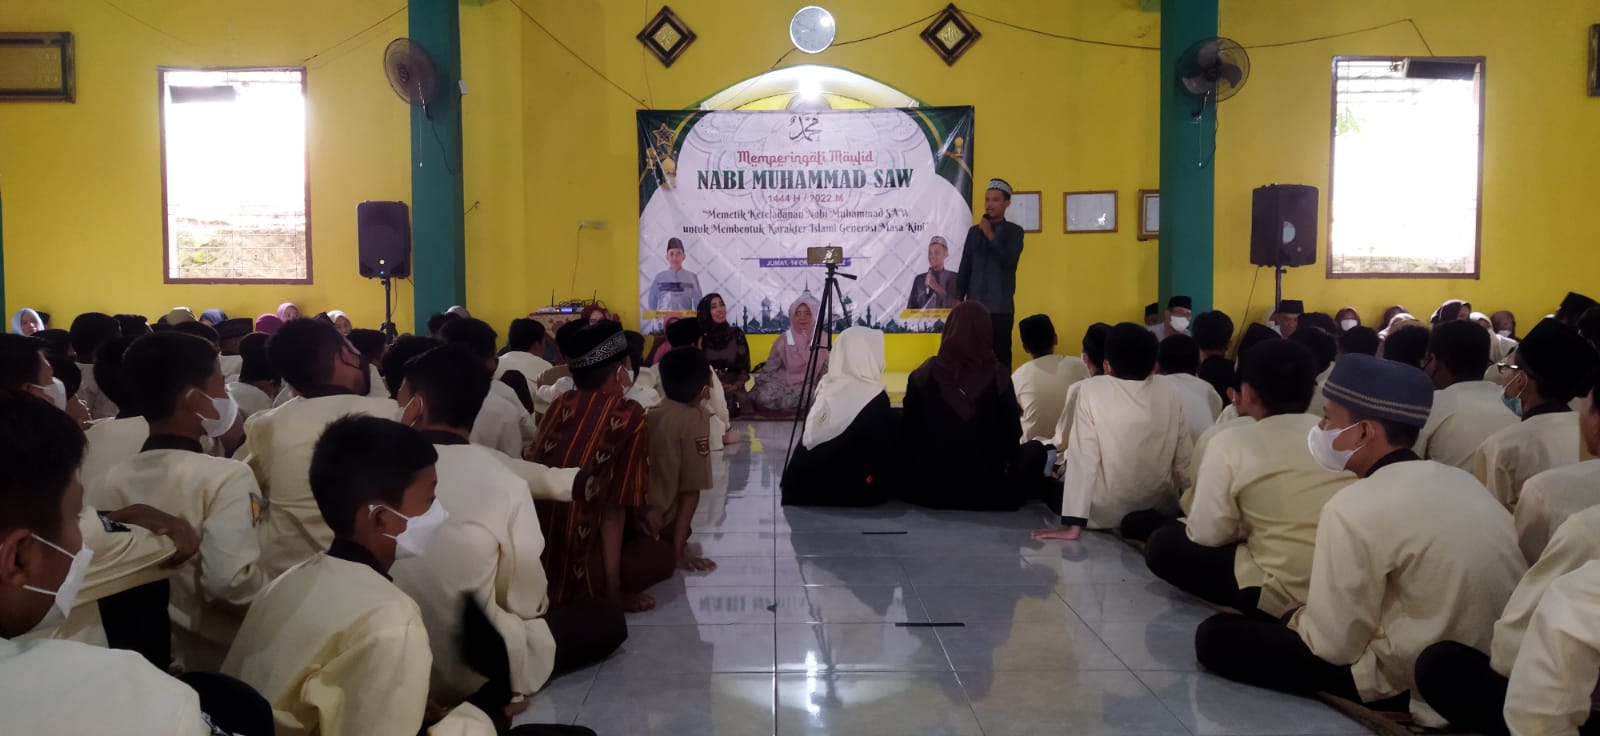 Rangkaian Kegiatan SMPN 14 Bandar Lampung : Mulai dari Bagi Rapor Hingga Pentas Kreasi